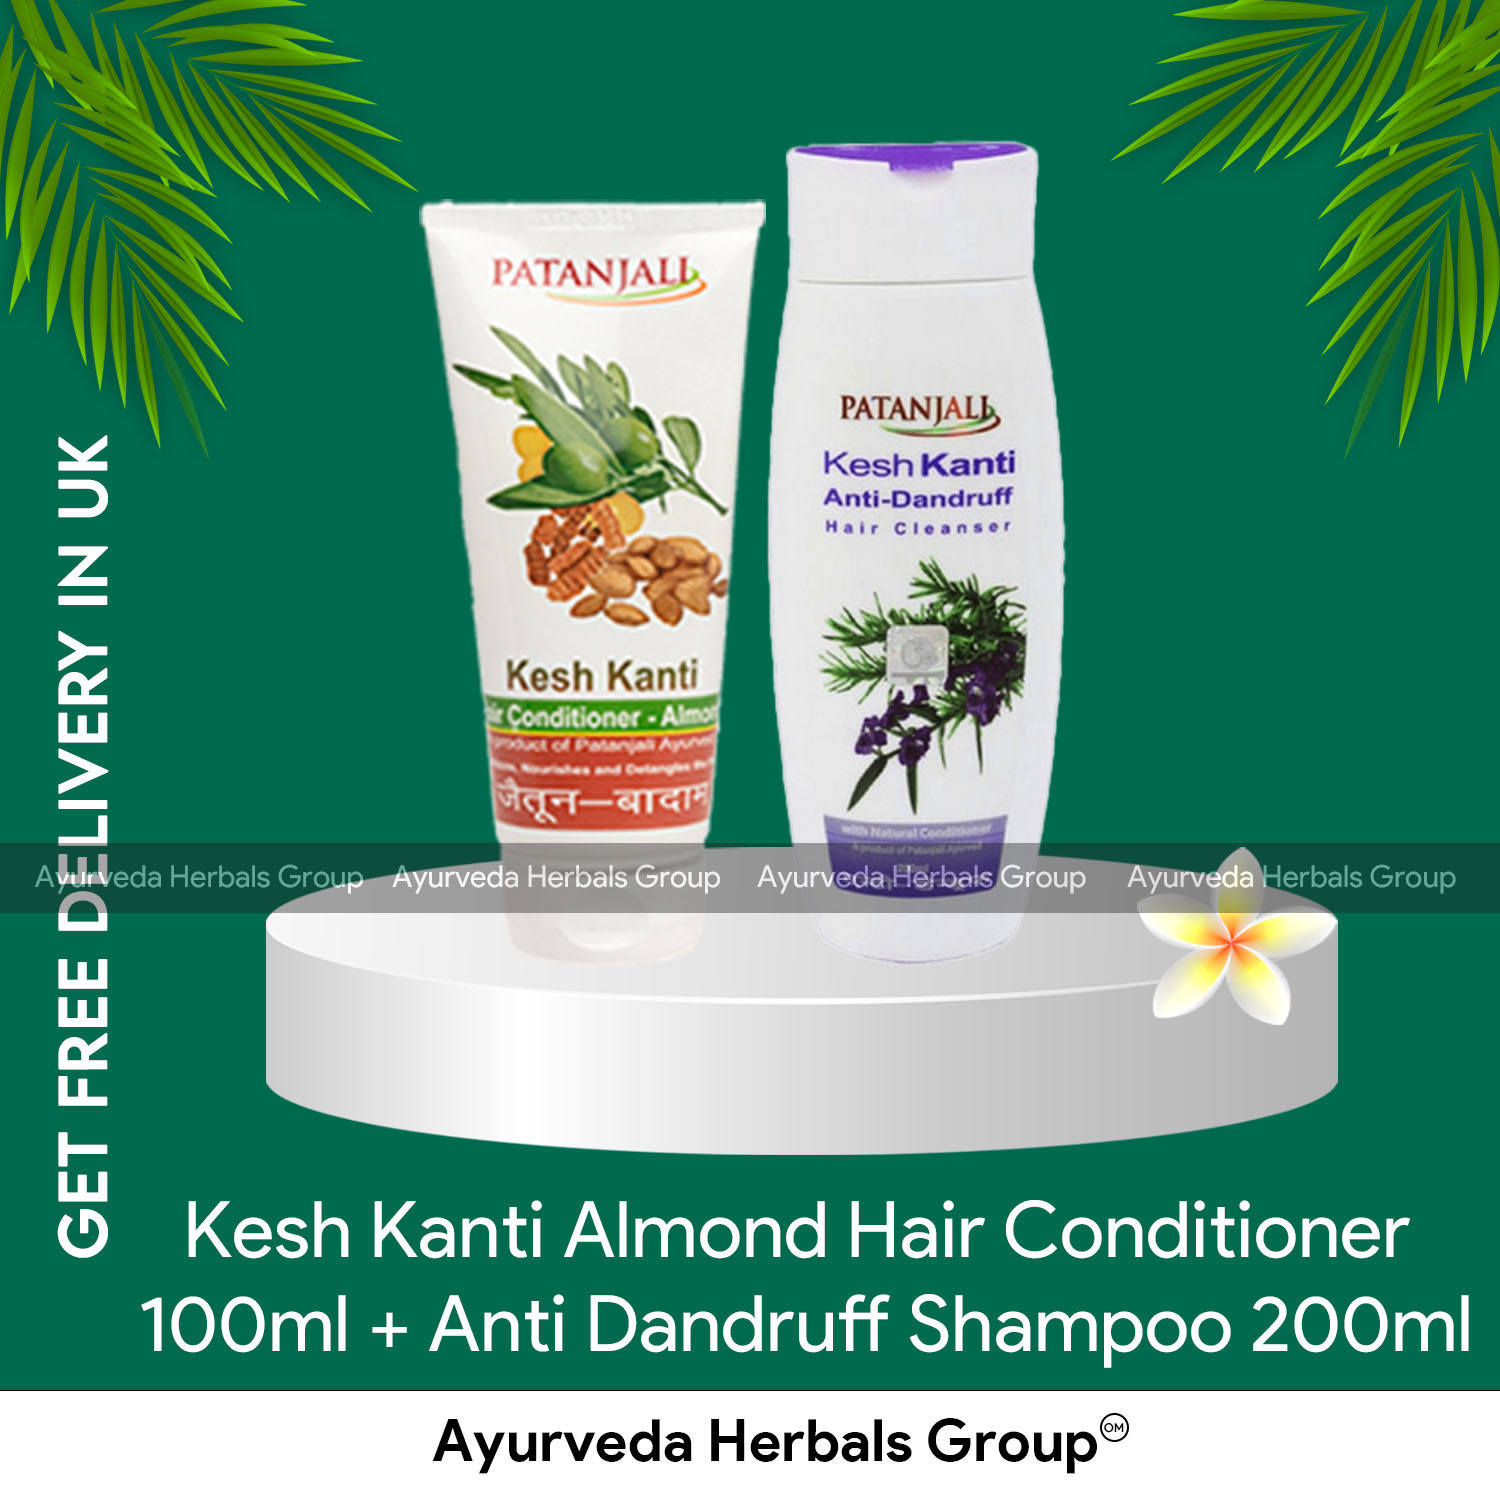 Patanjali Kesh Kanti Almond Hair Conditioner 100ml+Anti Dandruff Shampoo  200ml |